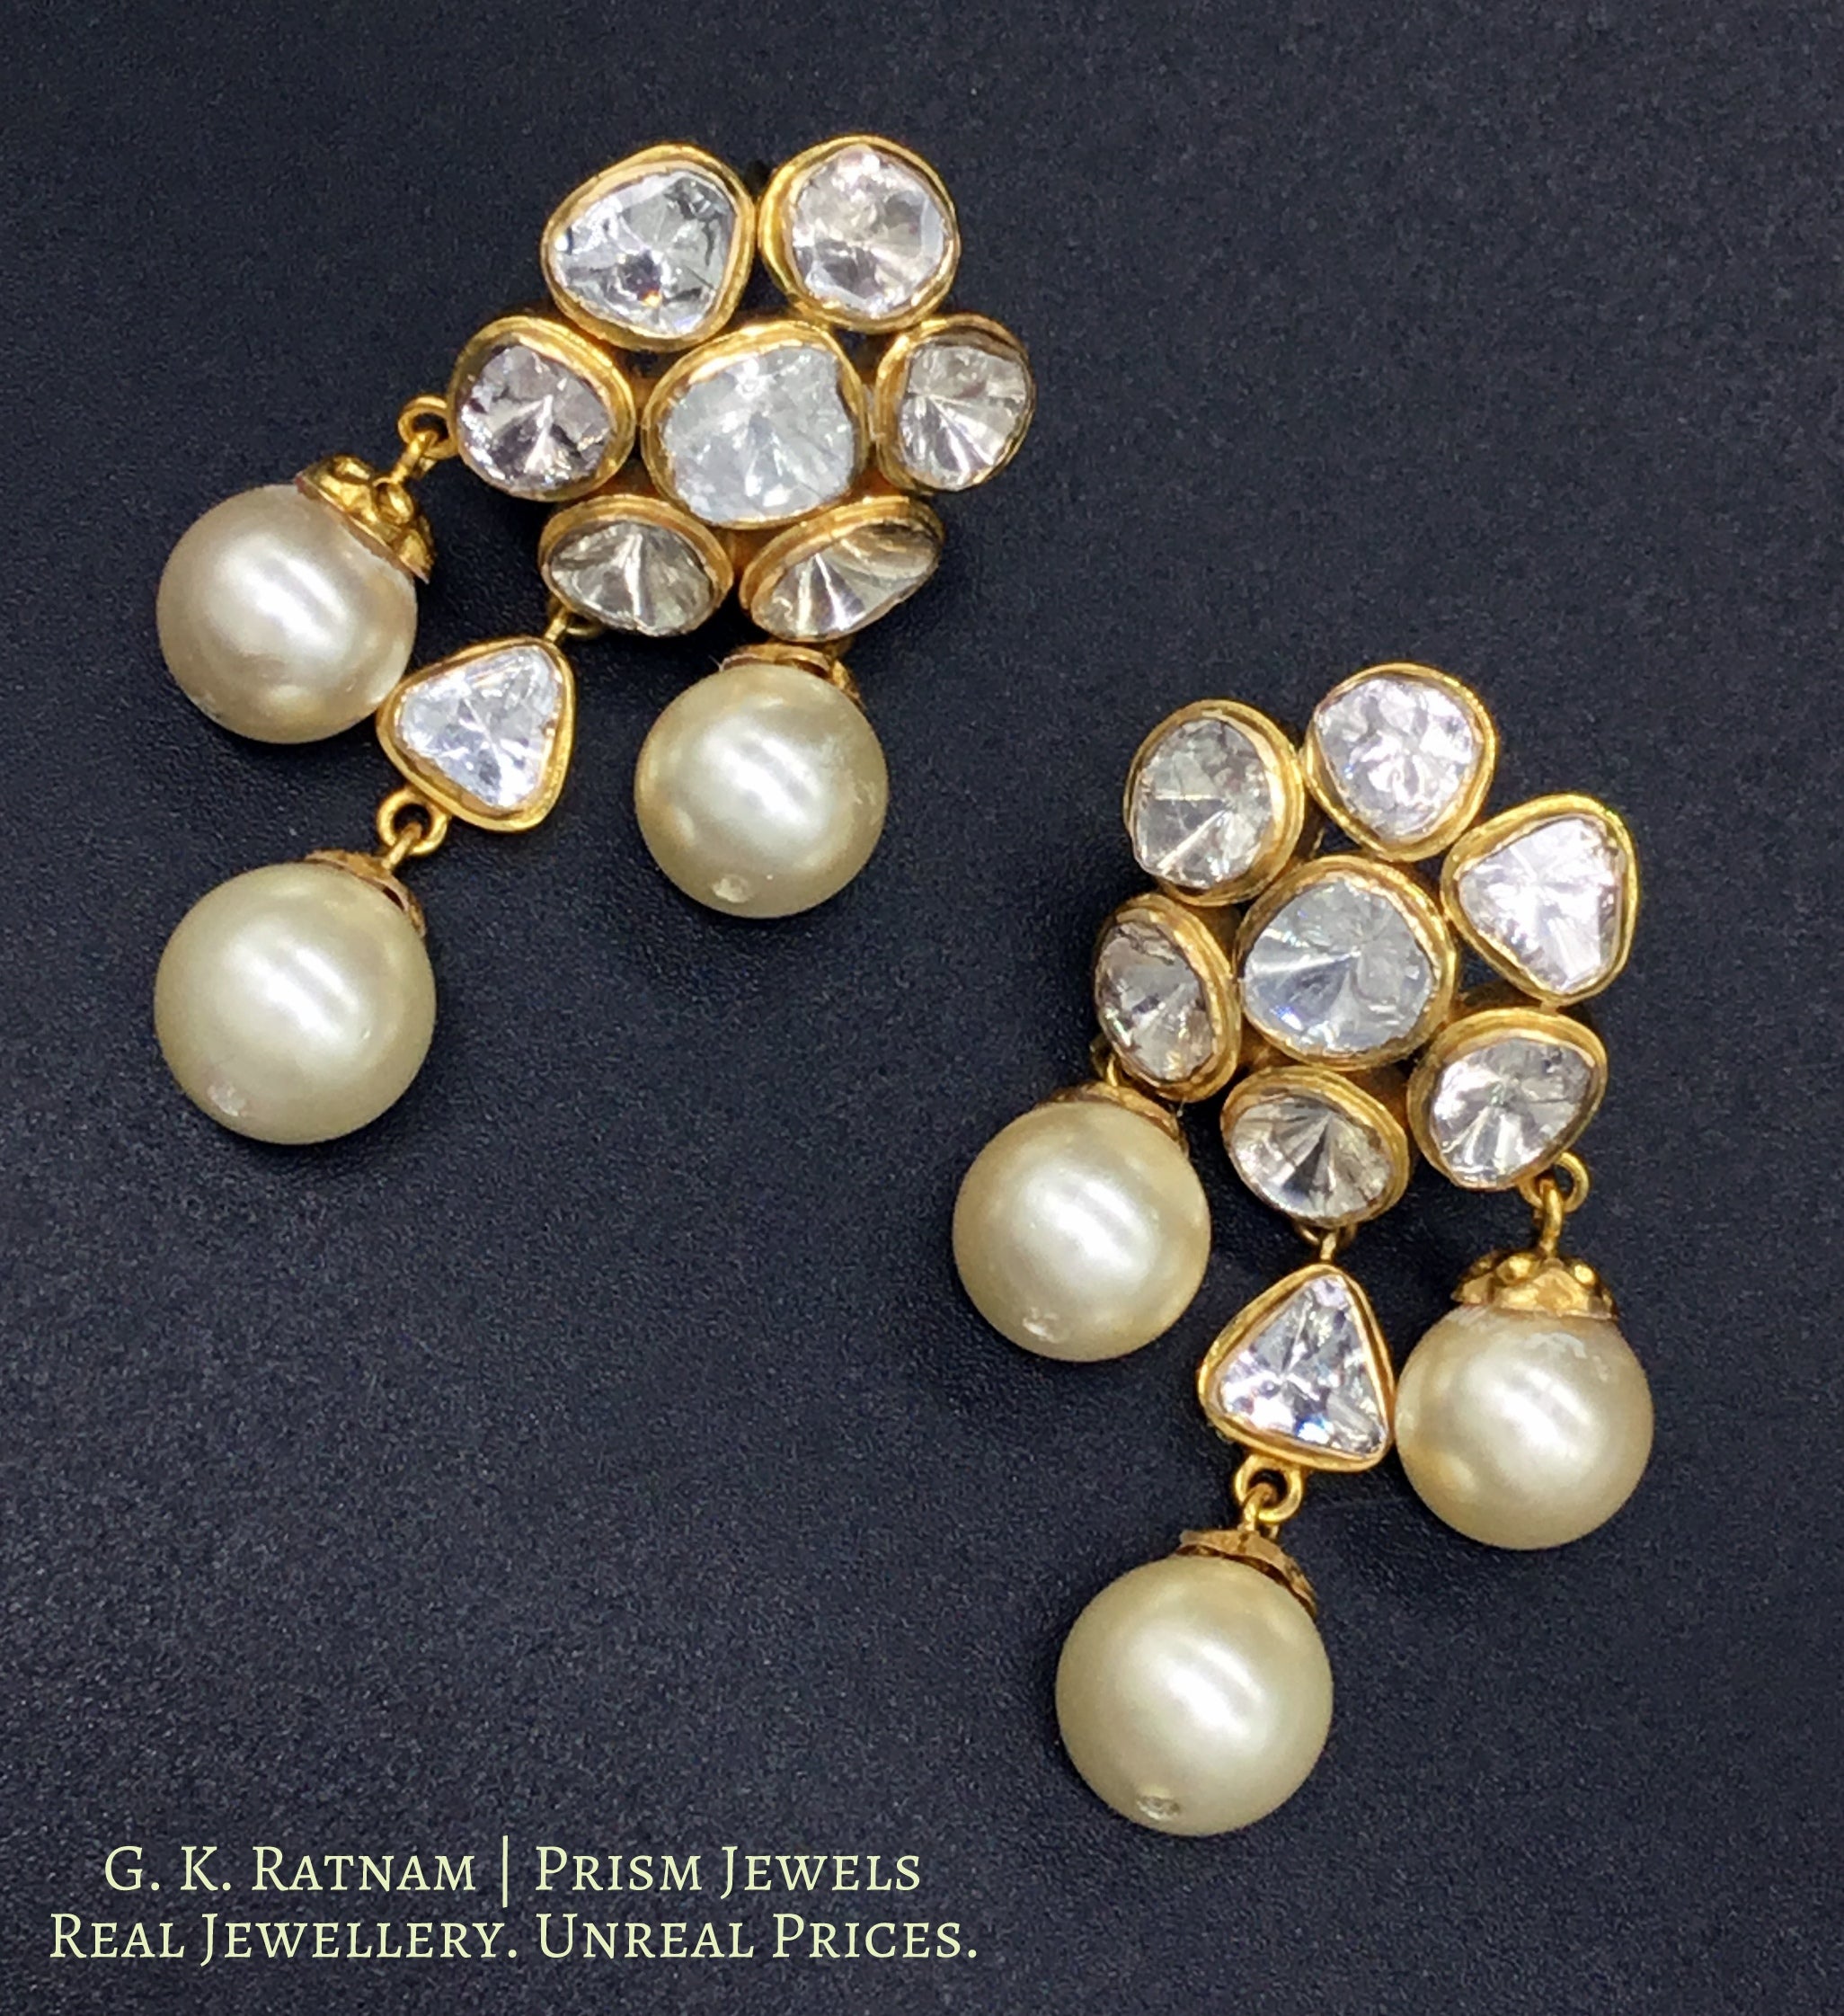 18k Gold and Diamond Polki Open Setting floral Tops / Studs Earring Pair with south-sea-like pearl hangings - gold diamond polki kundan meena jadau jewellery